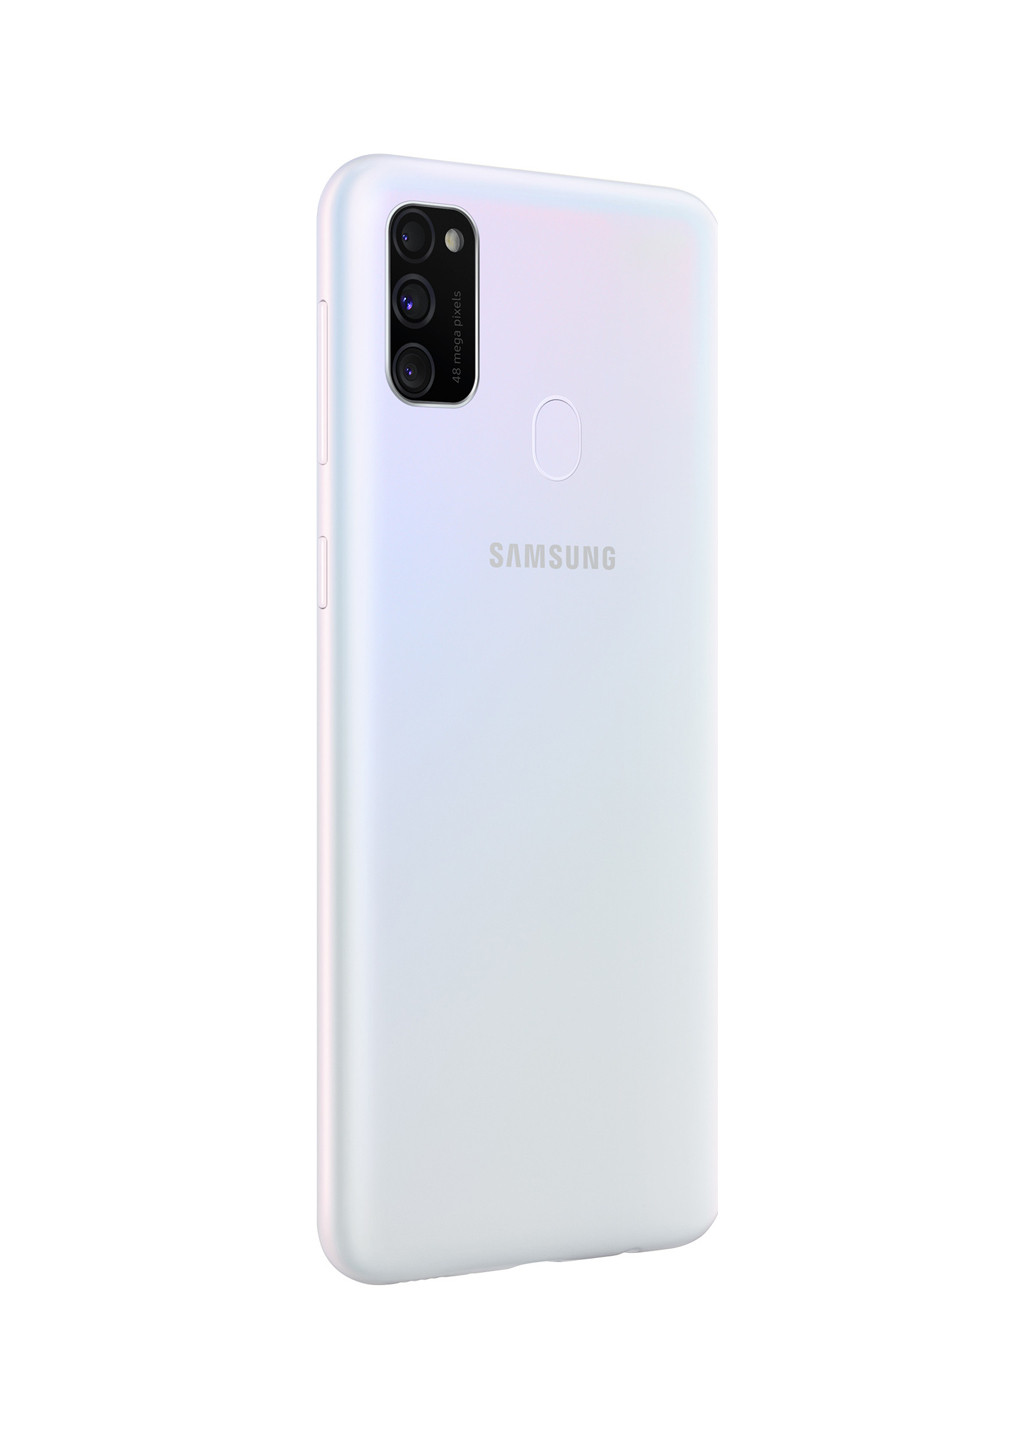 Смартфон Galaxy M30s 4 / 64GB Pearl White (SM-M307FZWUSEK) Samsung galaxy m30s 4/64gb pearl white (sm-m307fzwusek) (152569813)